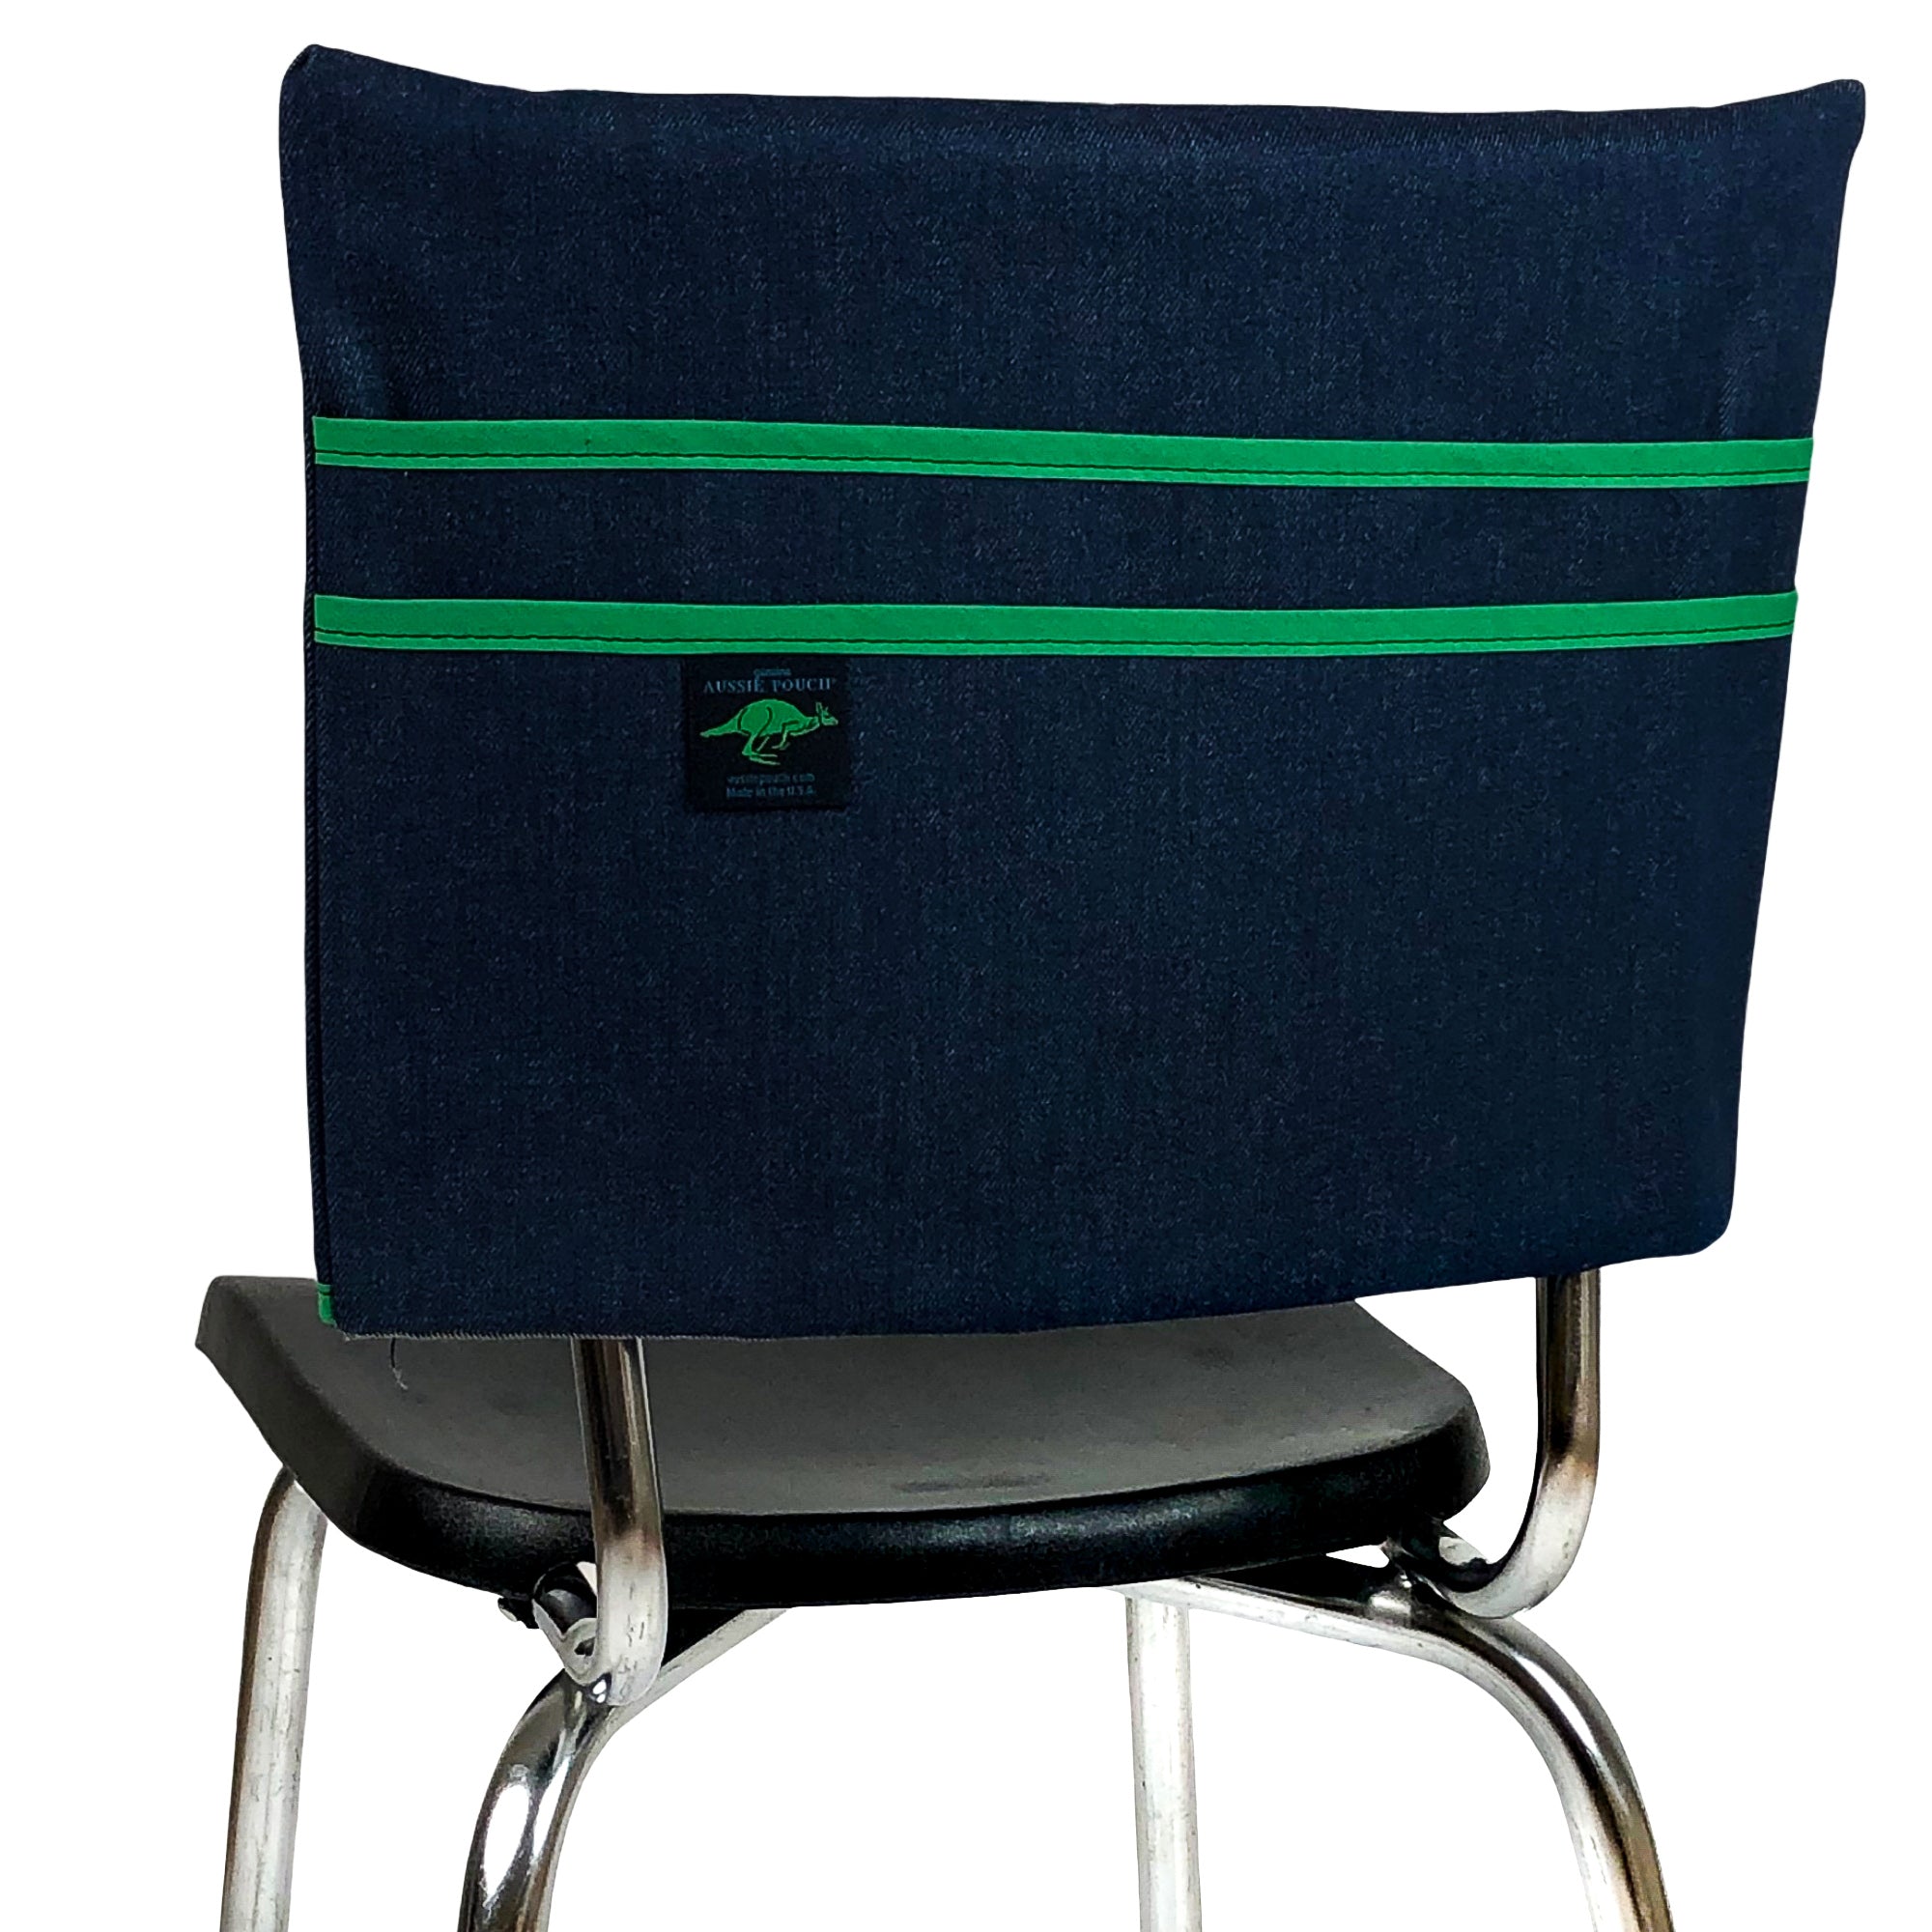 Aussie Pouch Classic Chair Pocket Green Trim